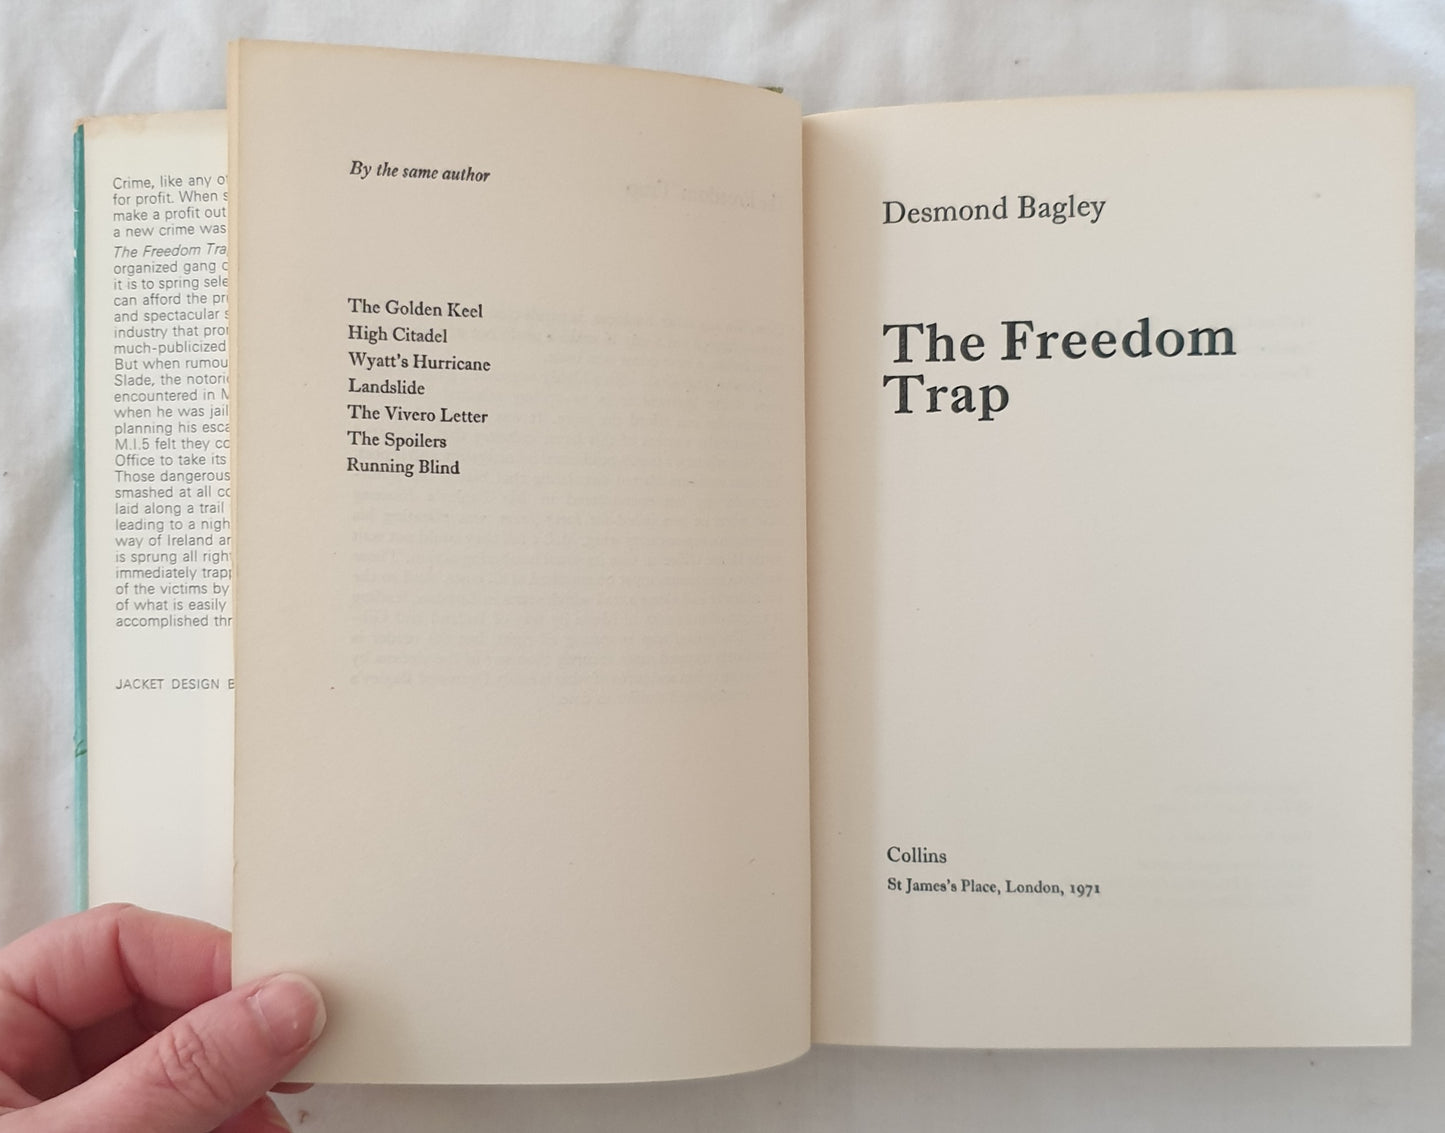 The Freedom Trap by Desmond Bagley